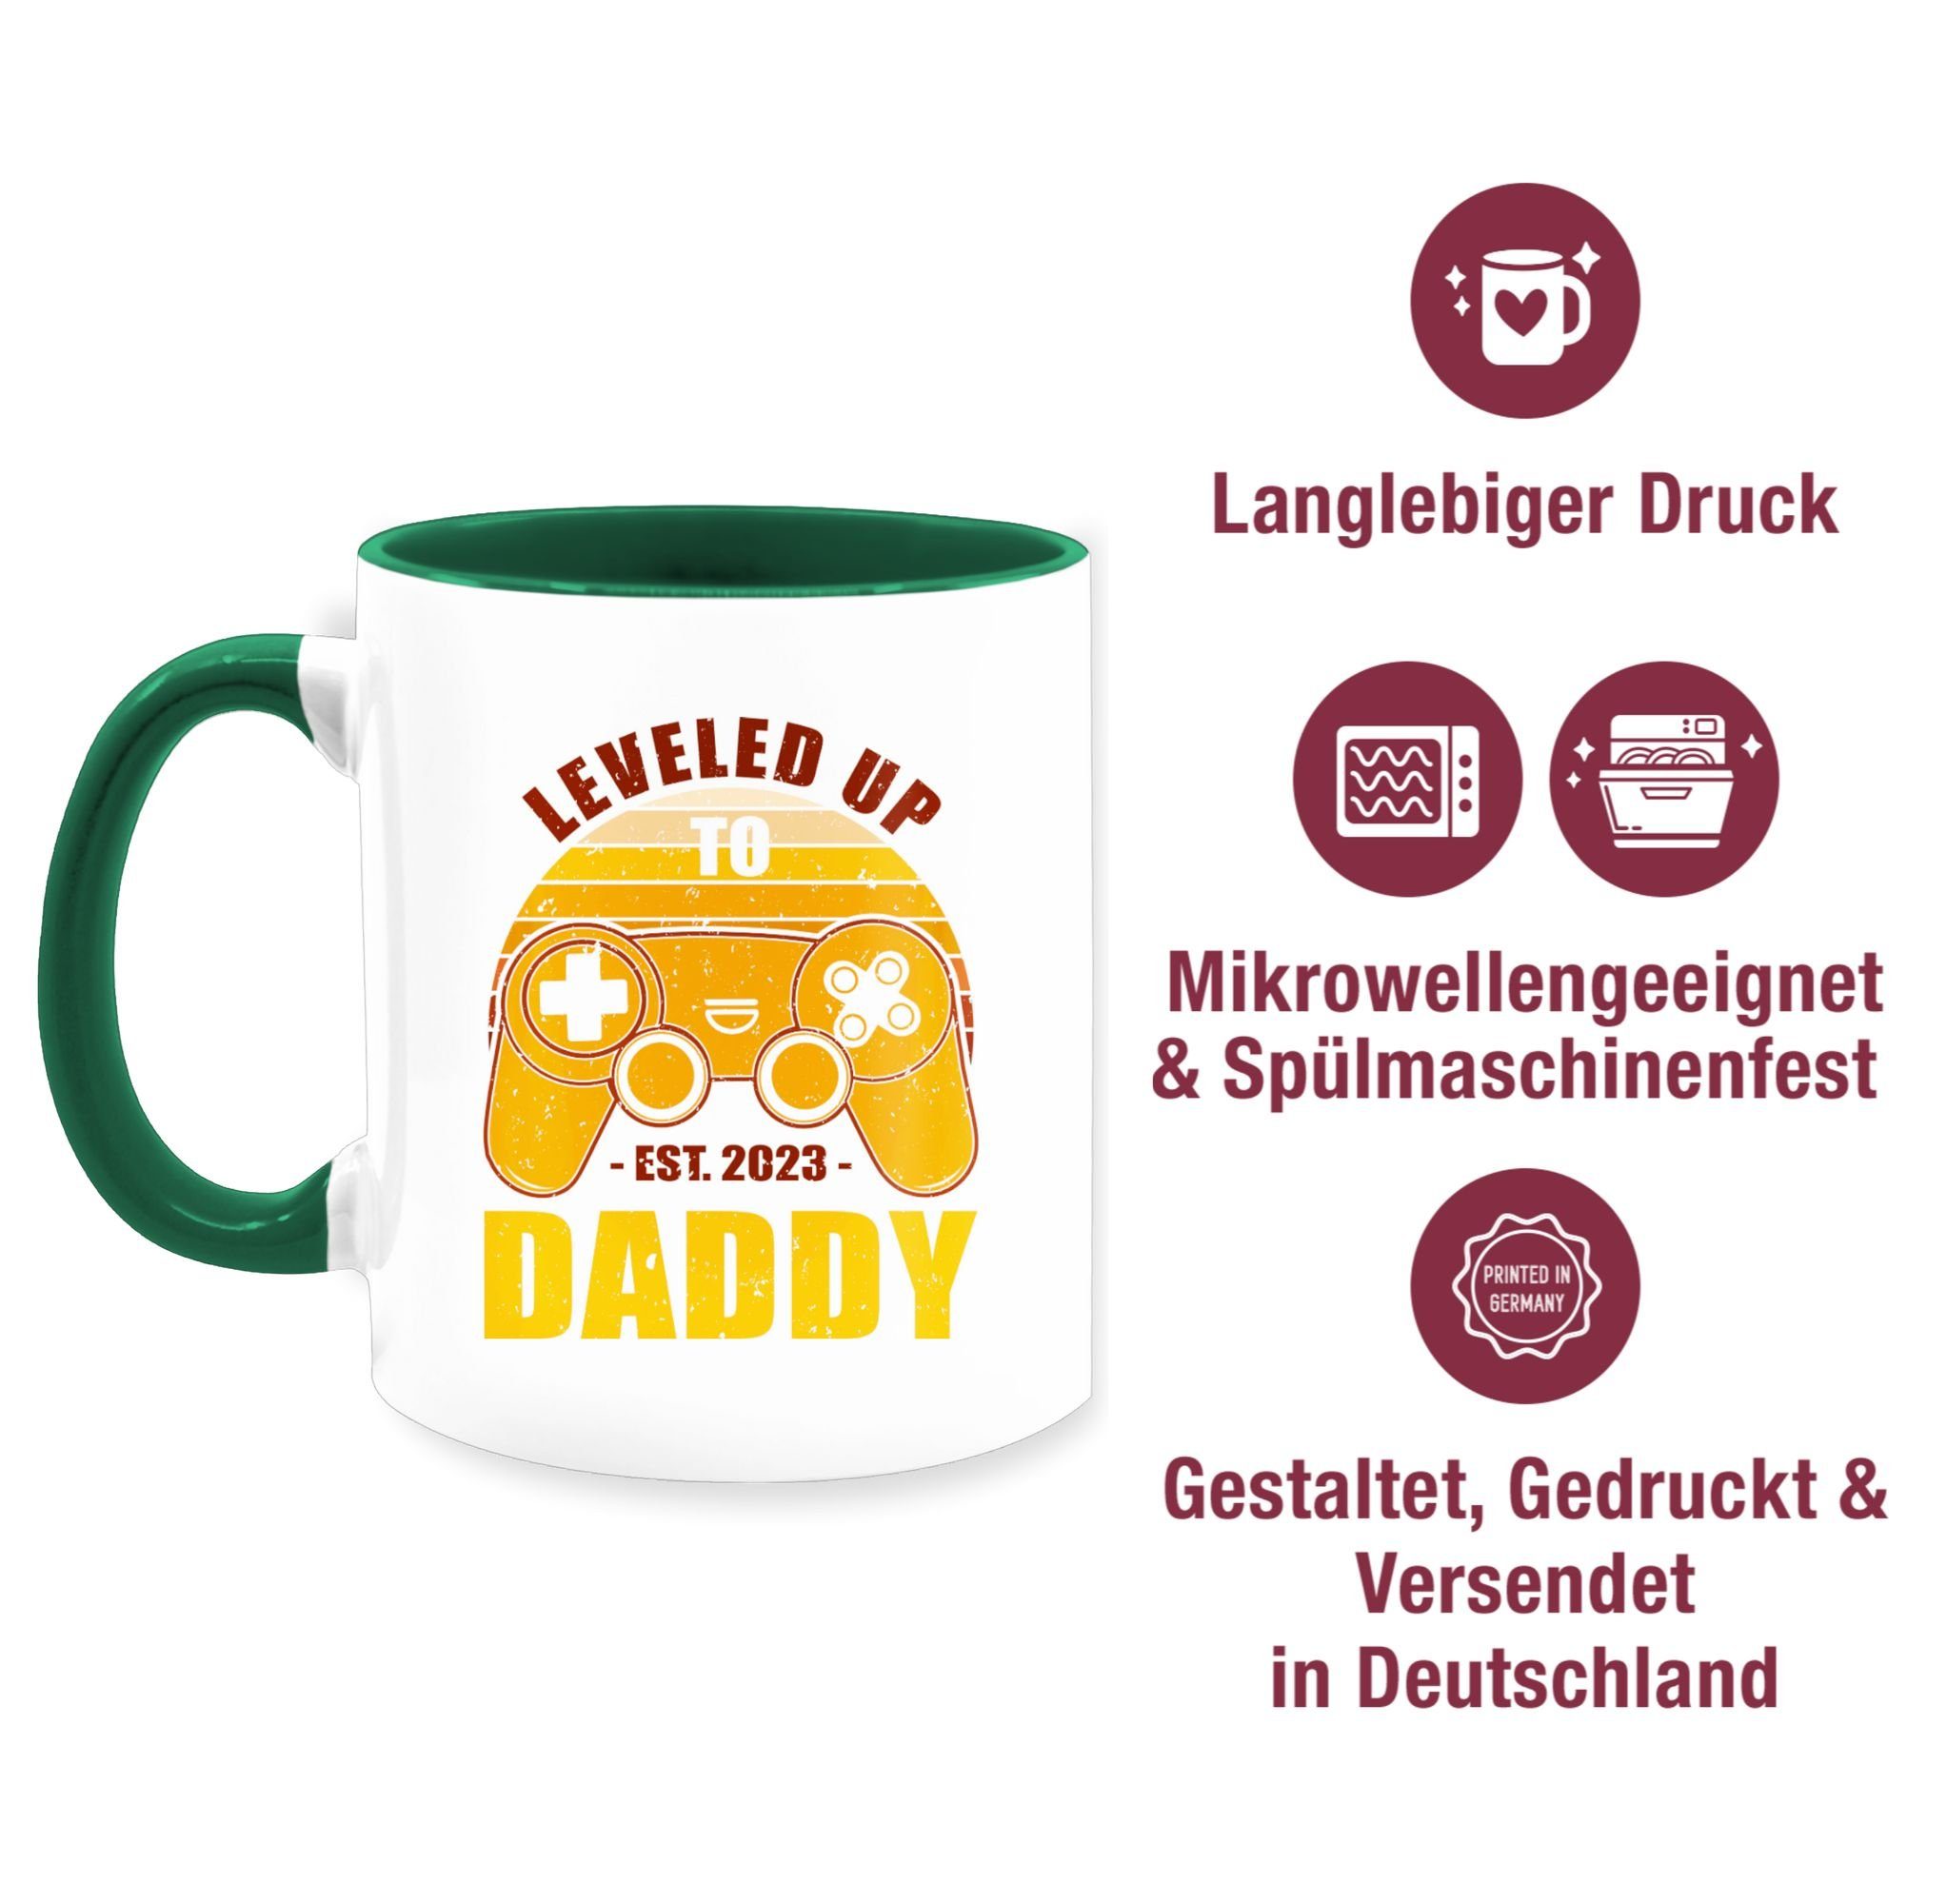 Est to Petrolgrün Daddy 2 Kaffeetasse 2023, Shirtracer Tasse Keramik, Leveled Vatertag Geschenk Up